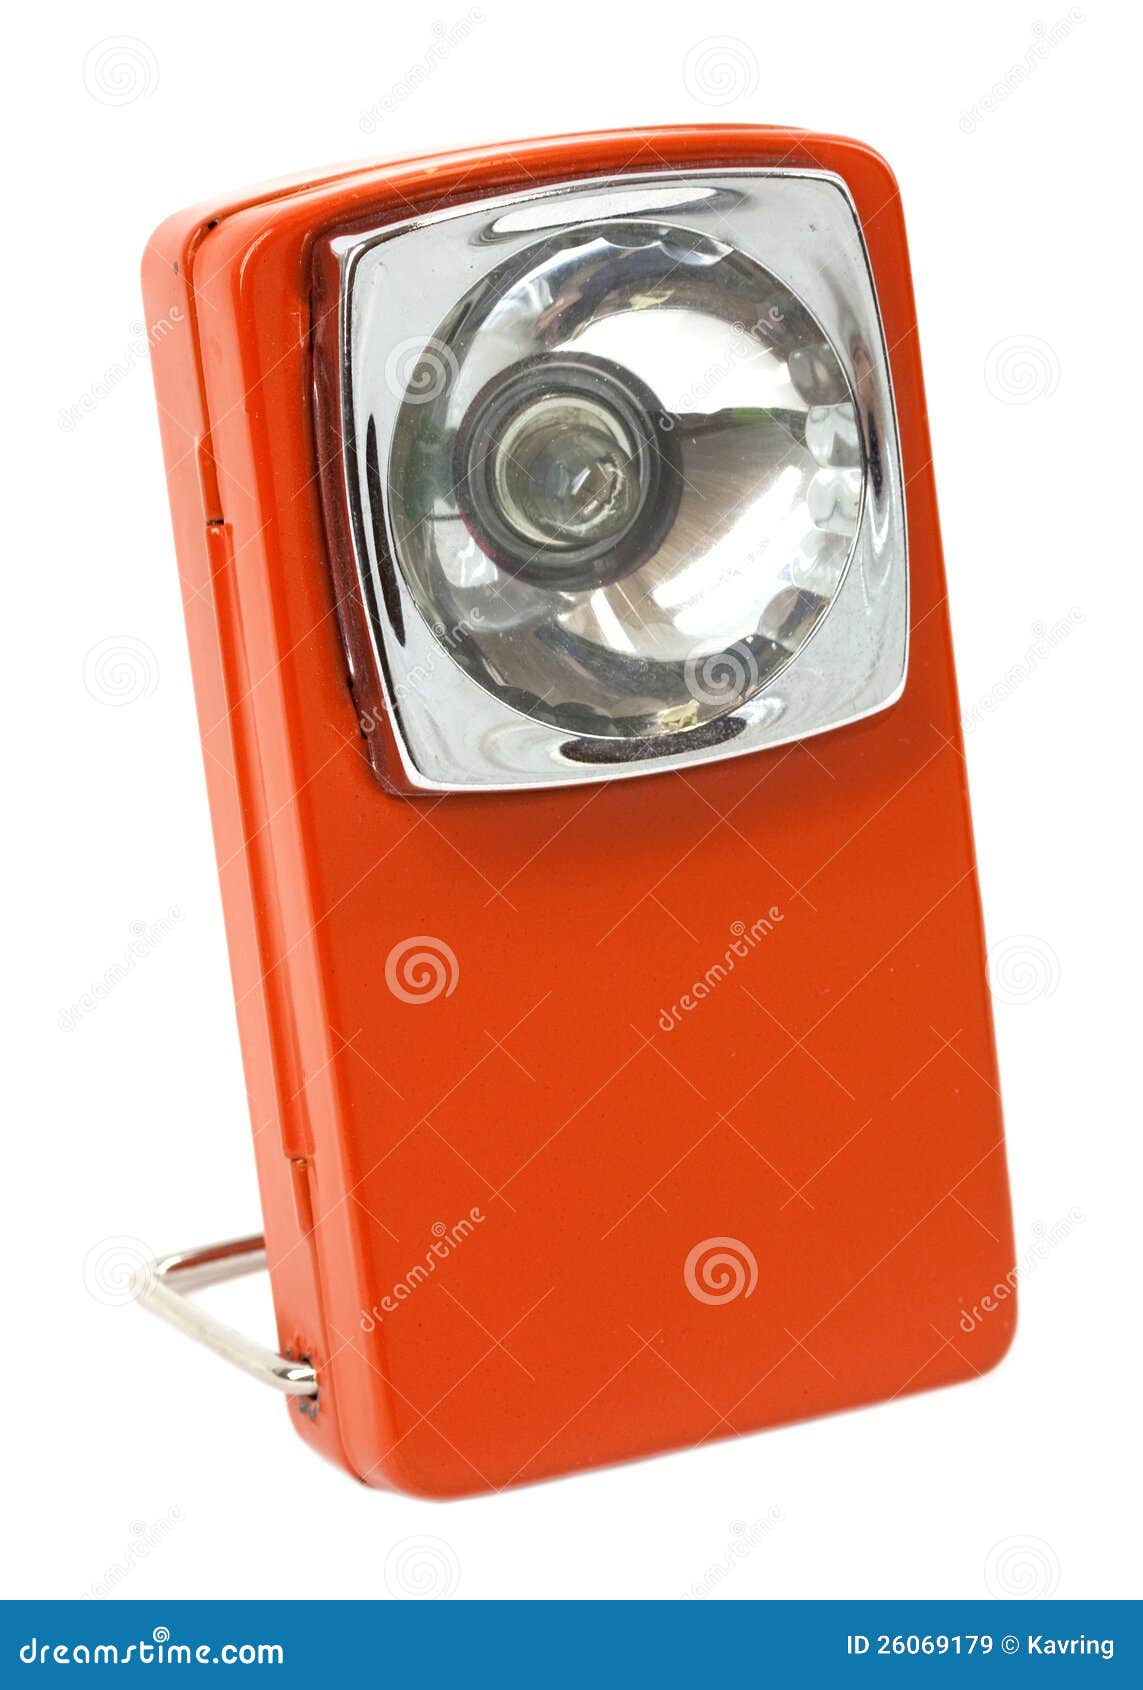 orange-retro-flashlight-26069179.jpg